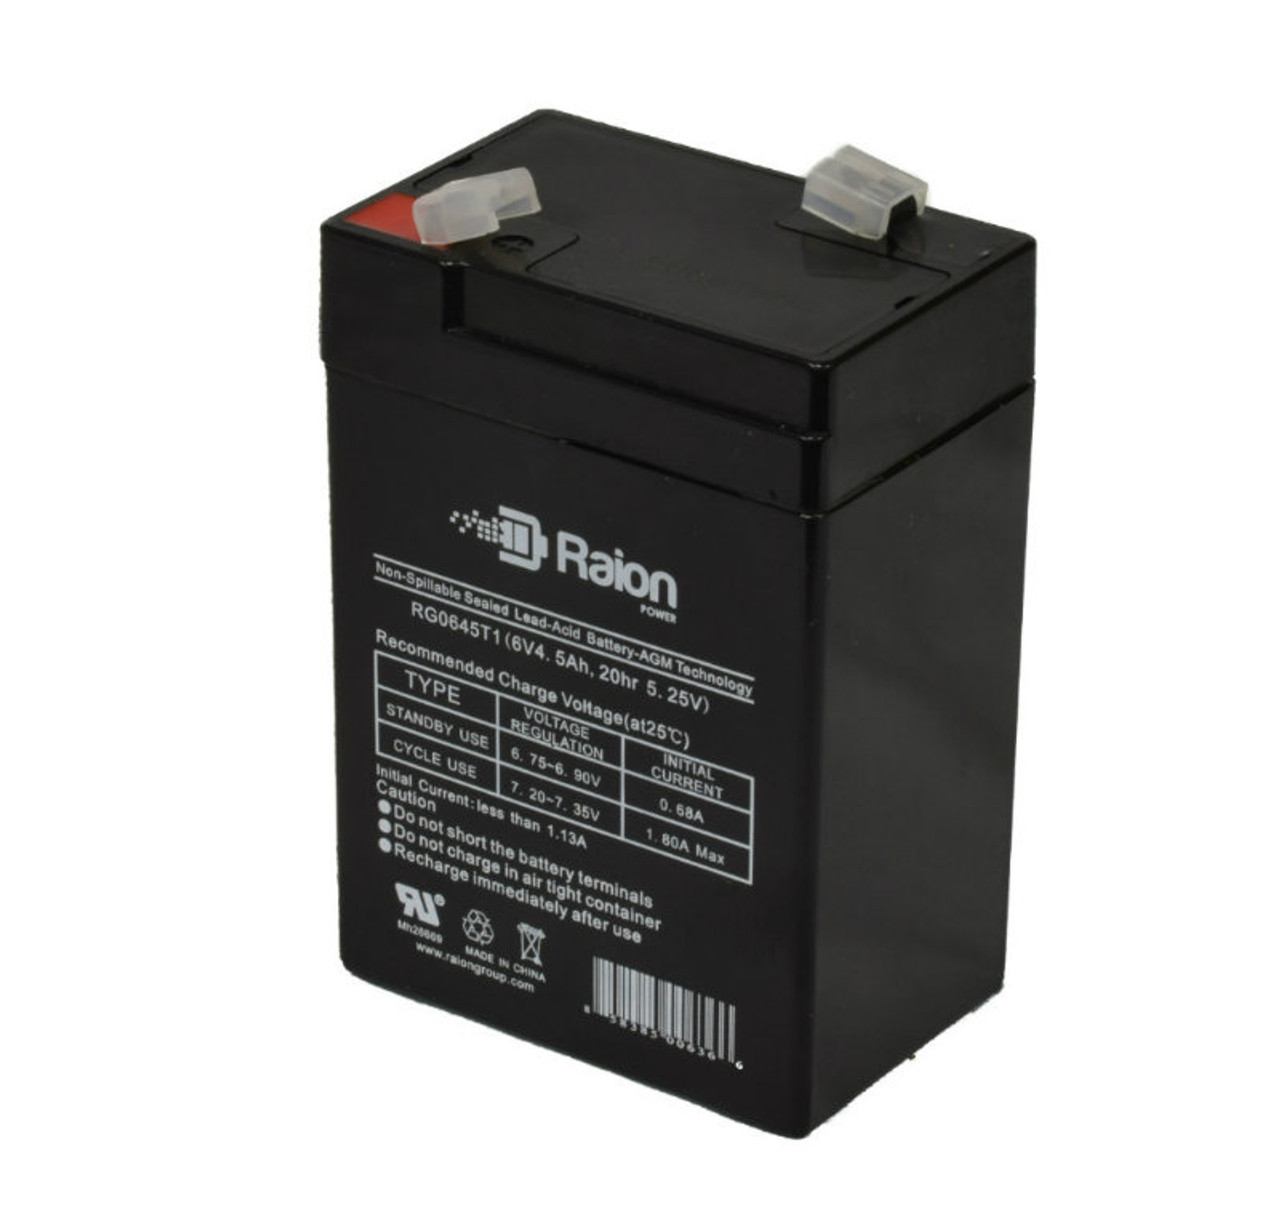 Raion Power RG0645T1 6V 4.5Ah Replacement Battery Cartridge for Kinghero SJ6V5Ah